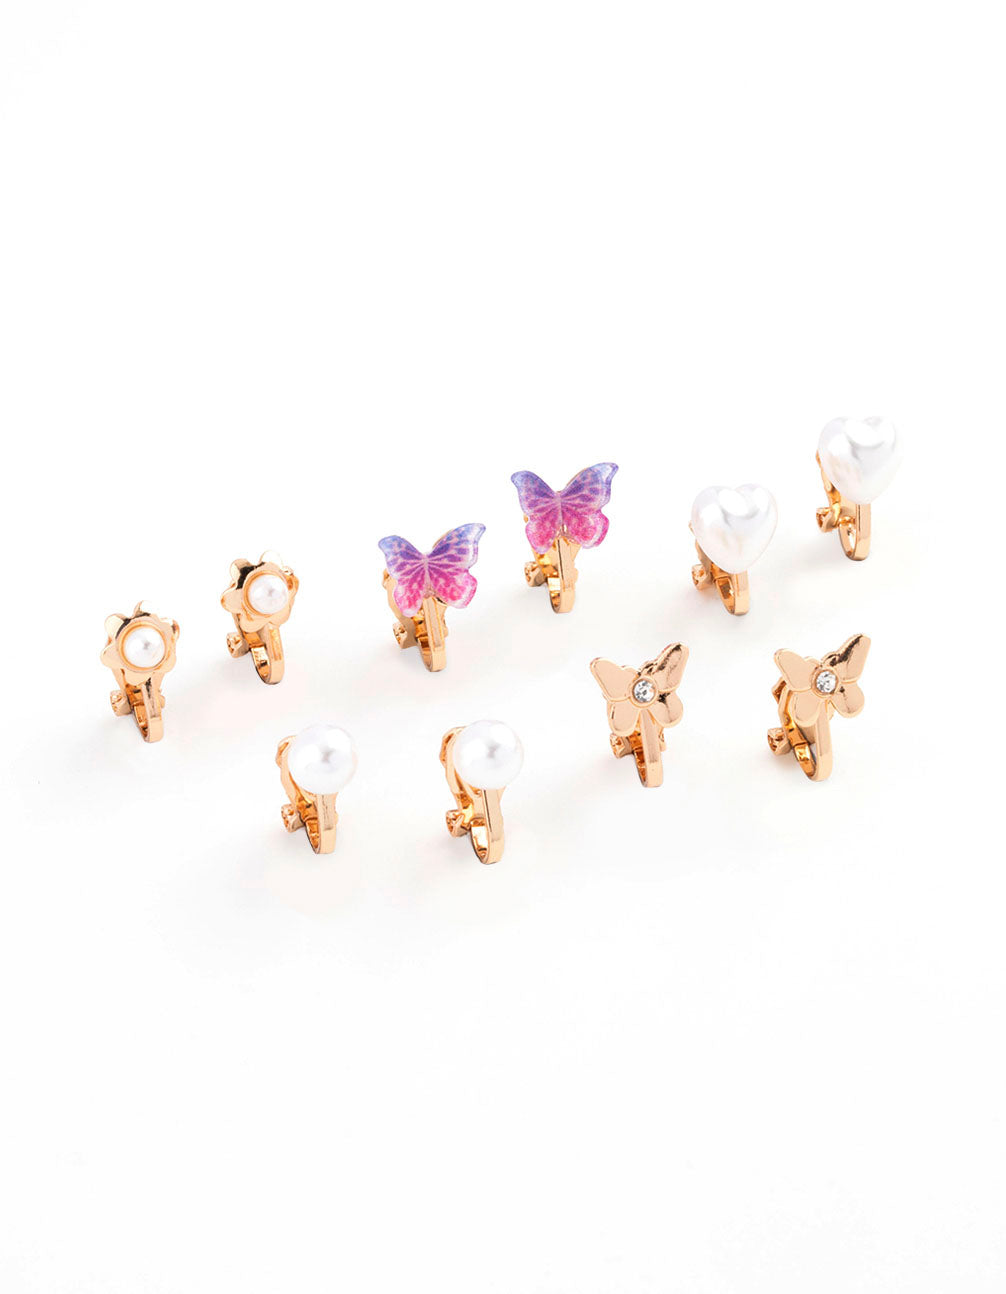 Buy 6 Pairs Handmade Girls CLIP ON Earrings Set in Gift Box Cute Animals  Frog Butterfly Unicorn Mermaid Bear Rabbit Online in India - Etsy